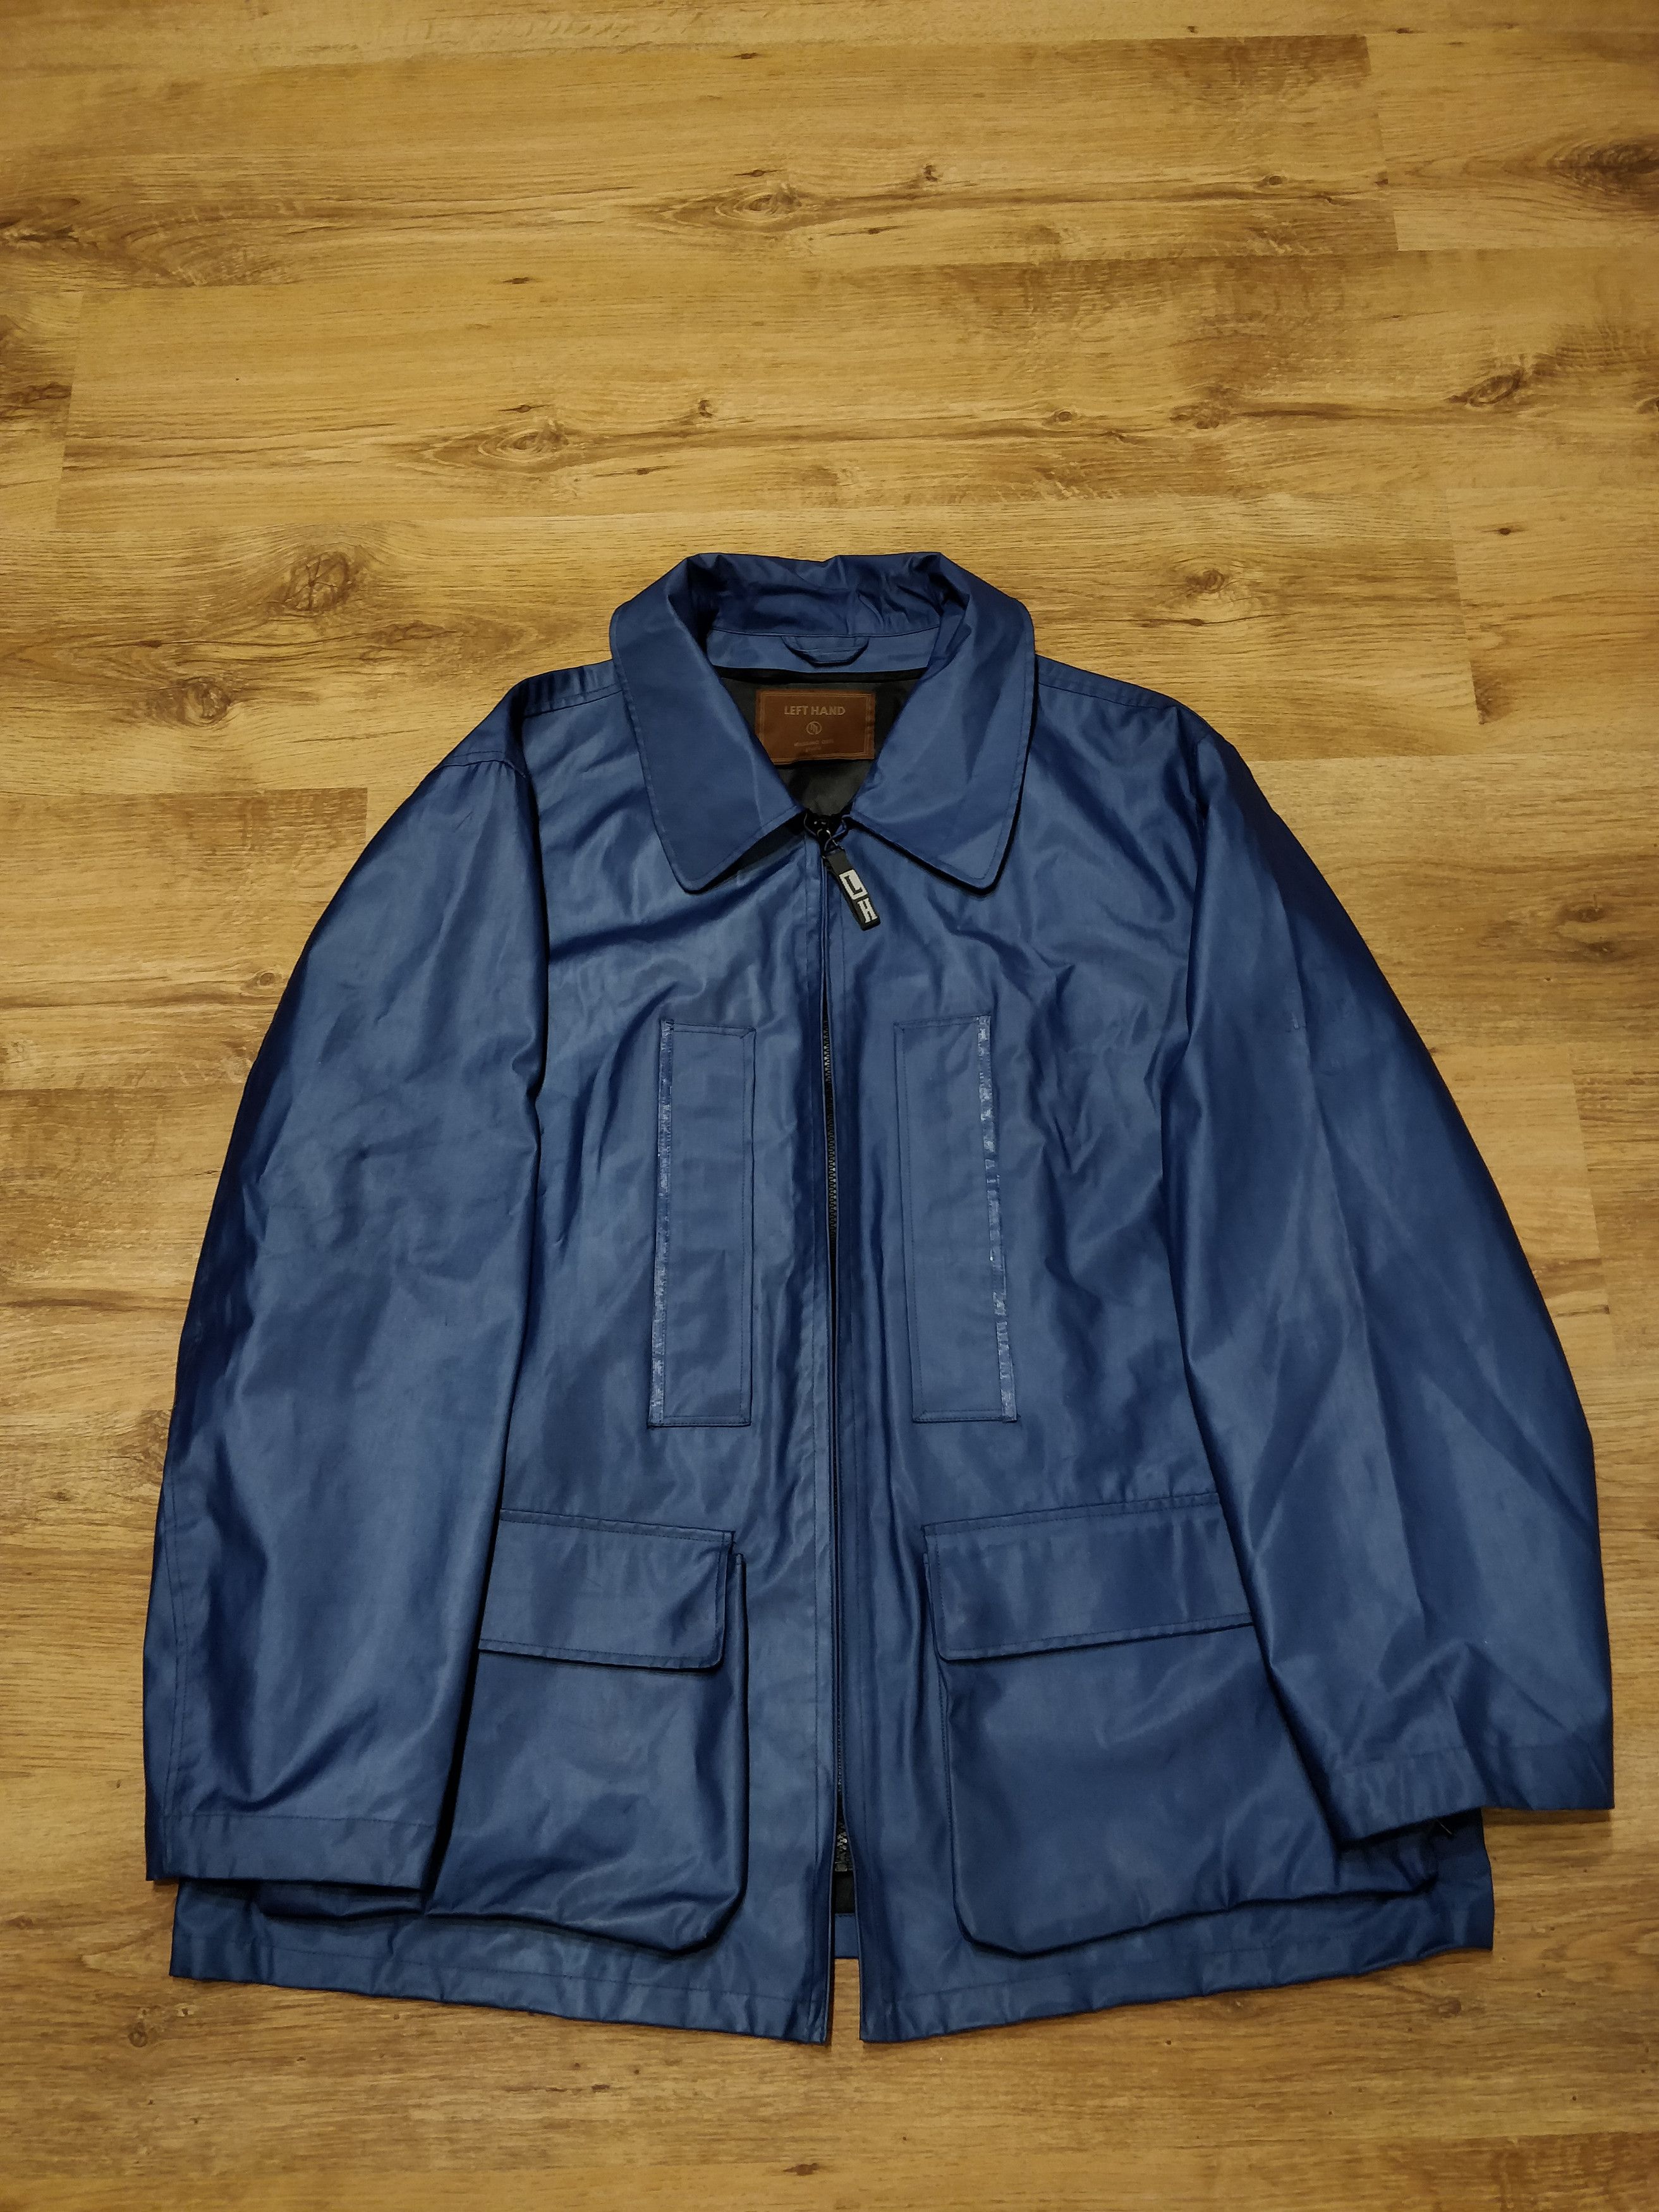 Massimo Osti Left Hand Massimo Osti Blue Jacket Made in Italy | Grailed